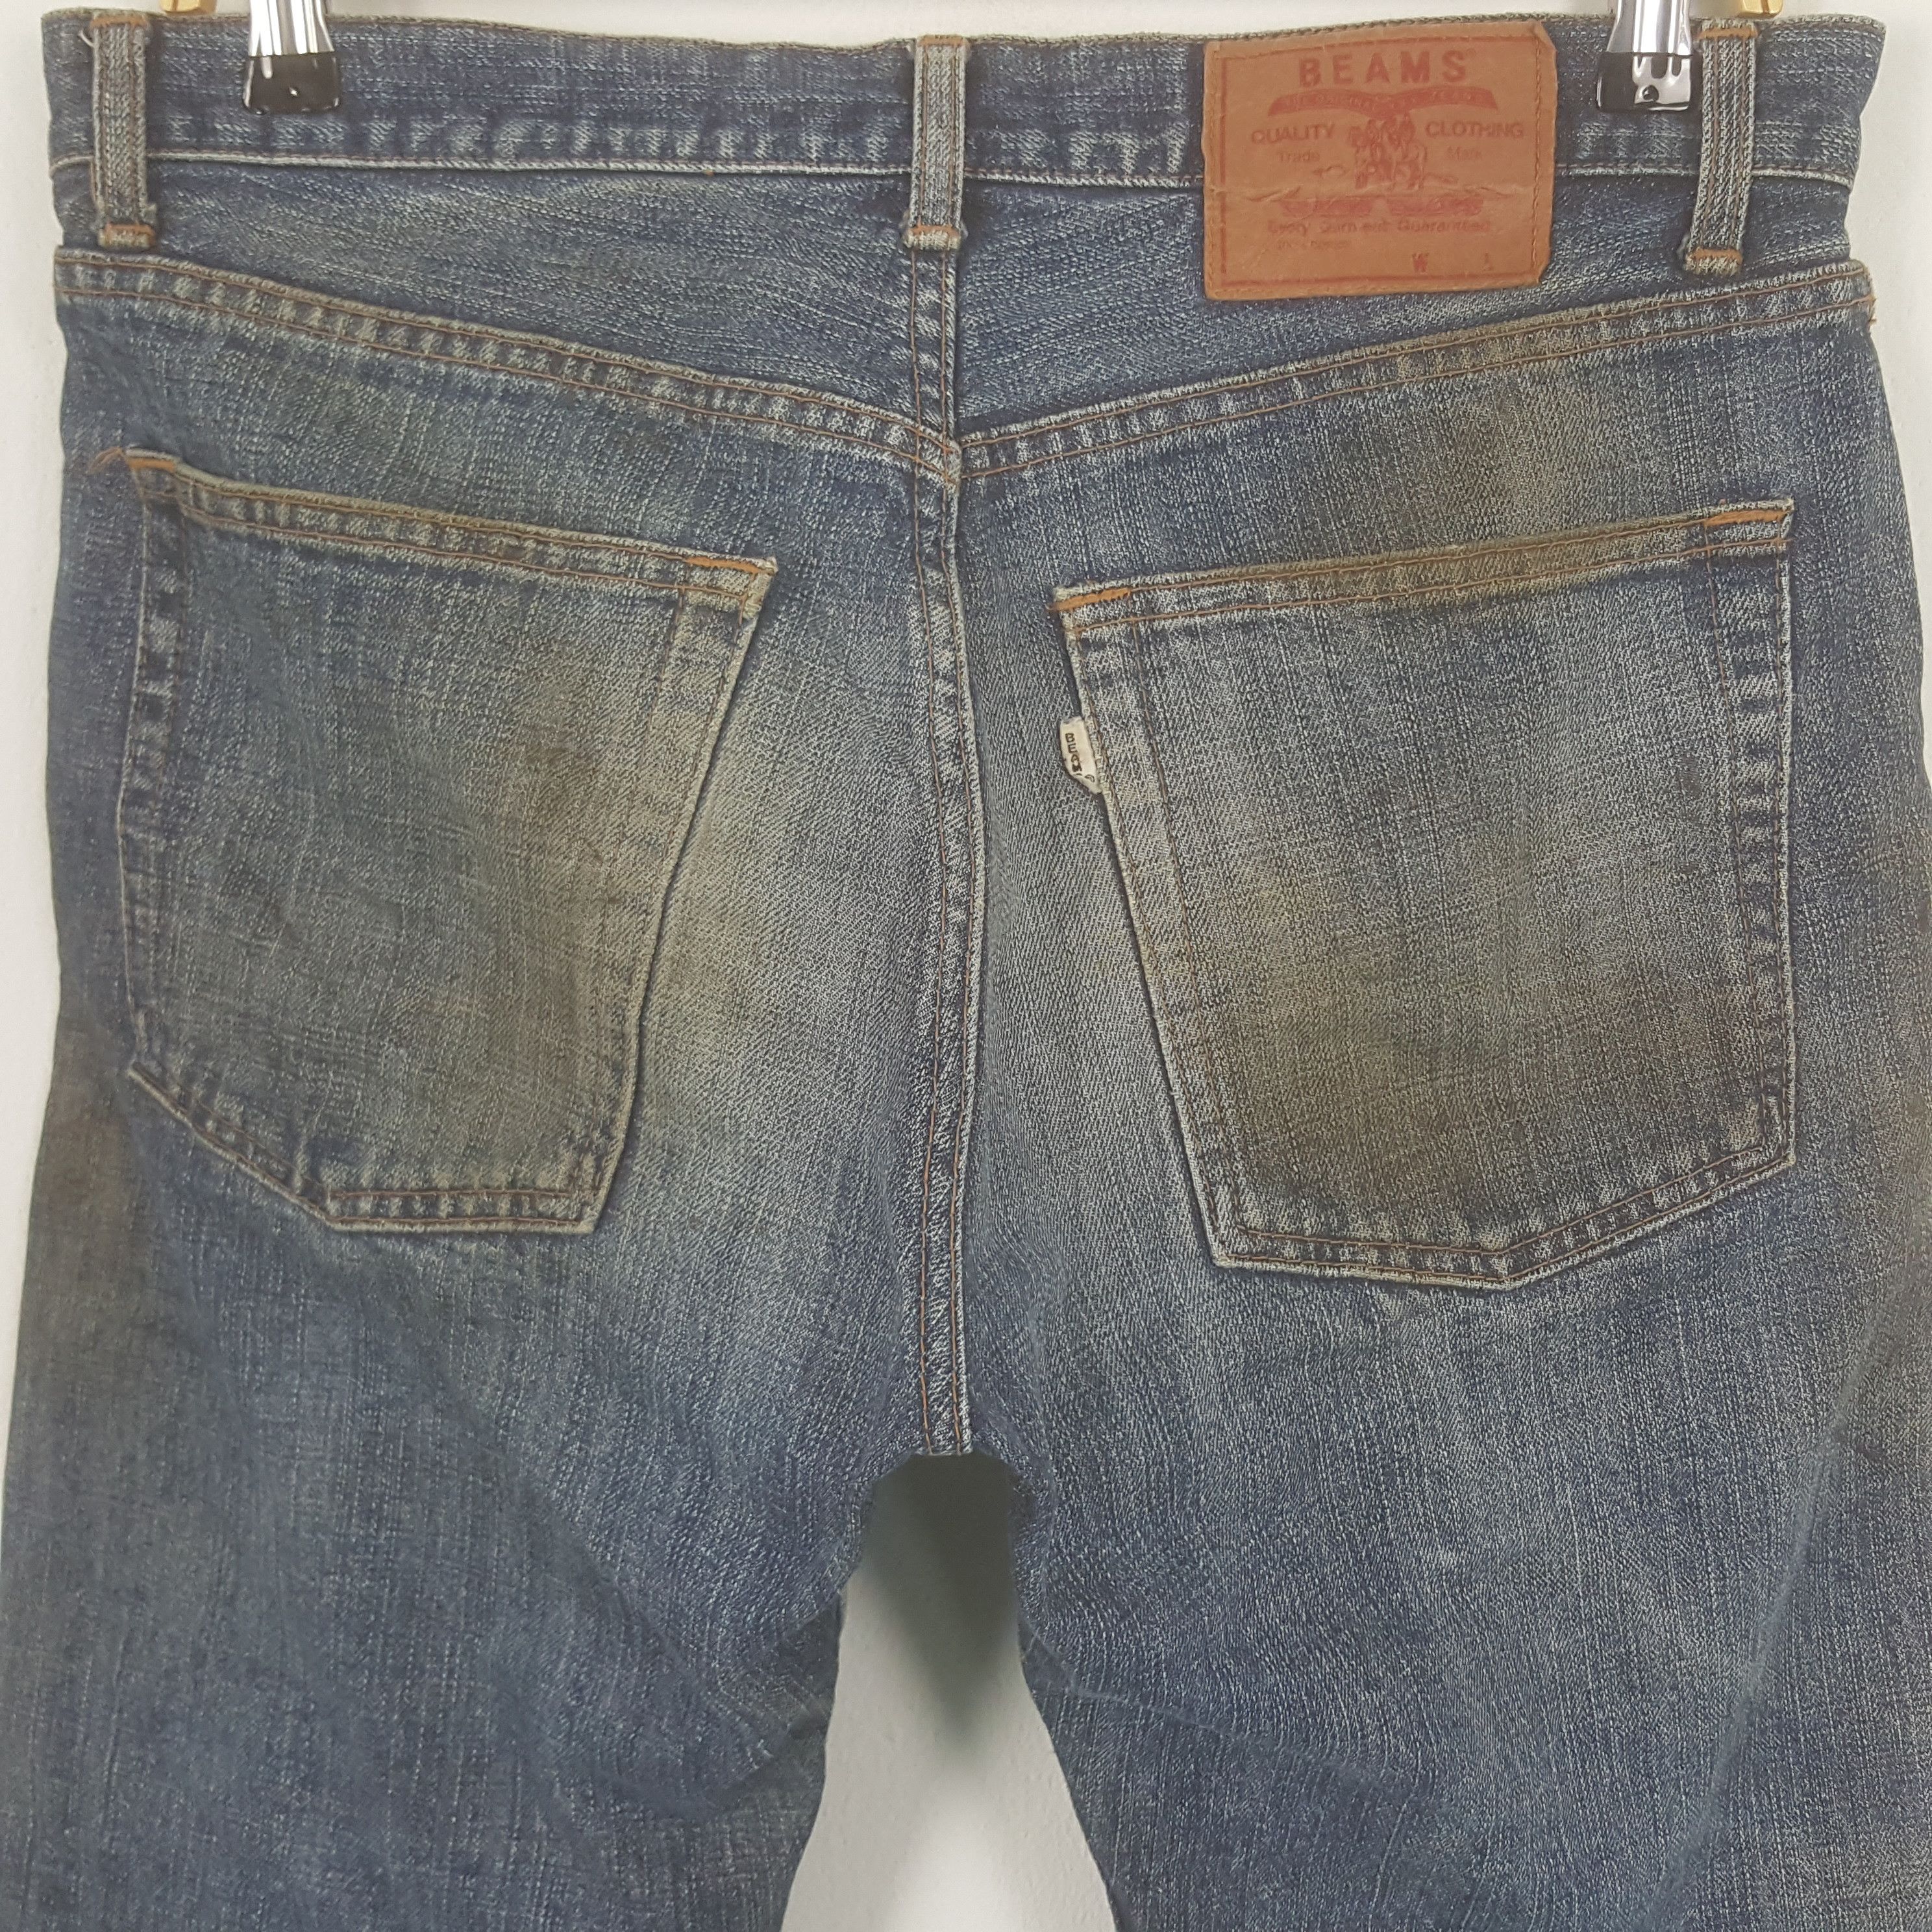 Vintage Vintage Beams Japanese Brand Distressed Shorts Denim Jeans Size US 32 / EU 48 - 2 Preview